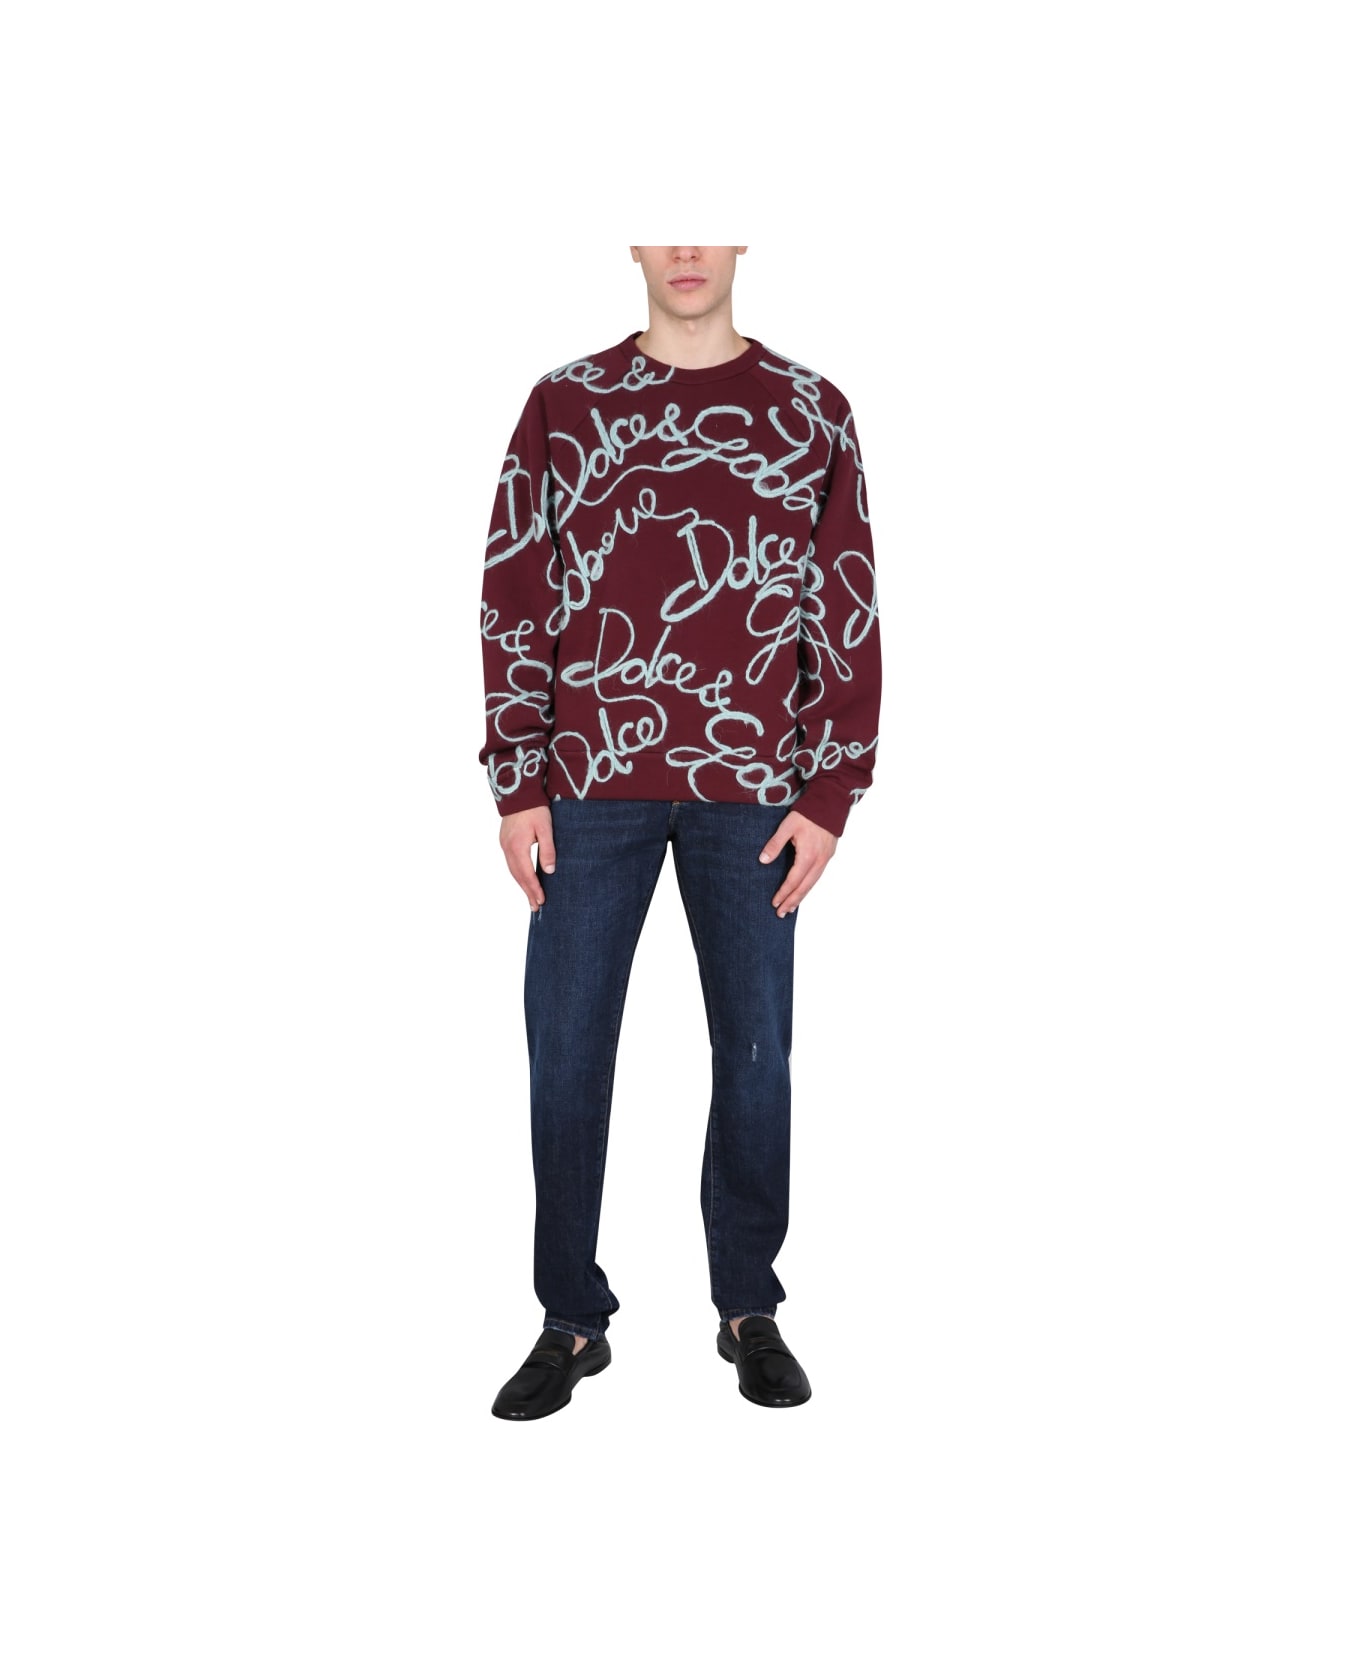 Dolce & Gabbana Embroidered Sweatshirt - BORDEAUX